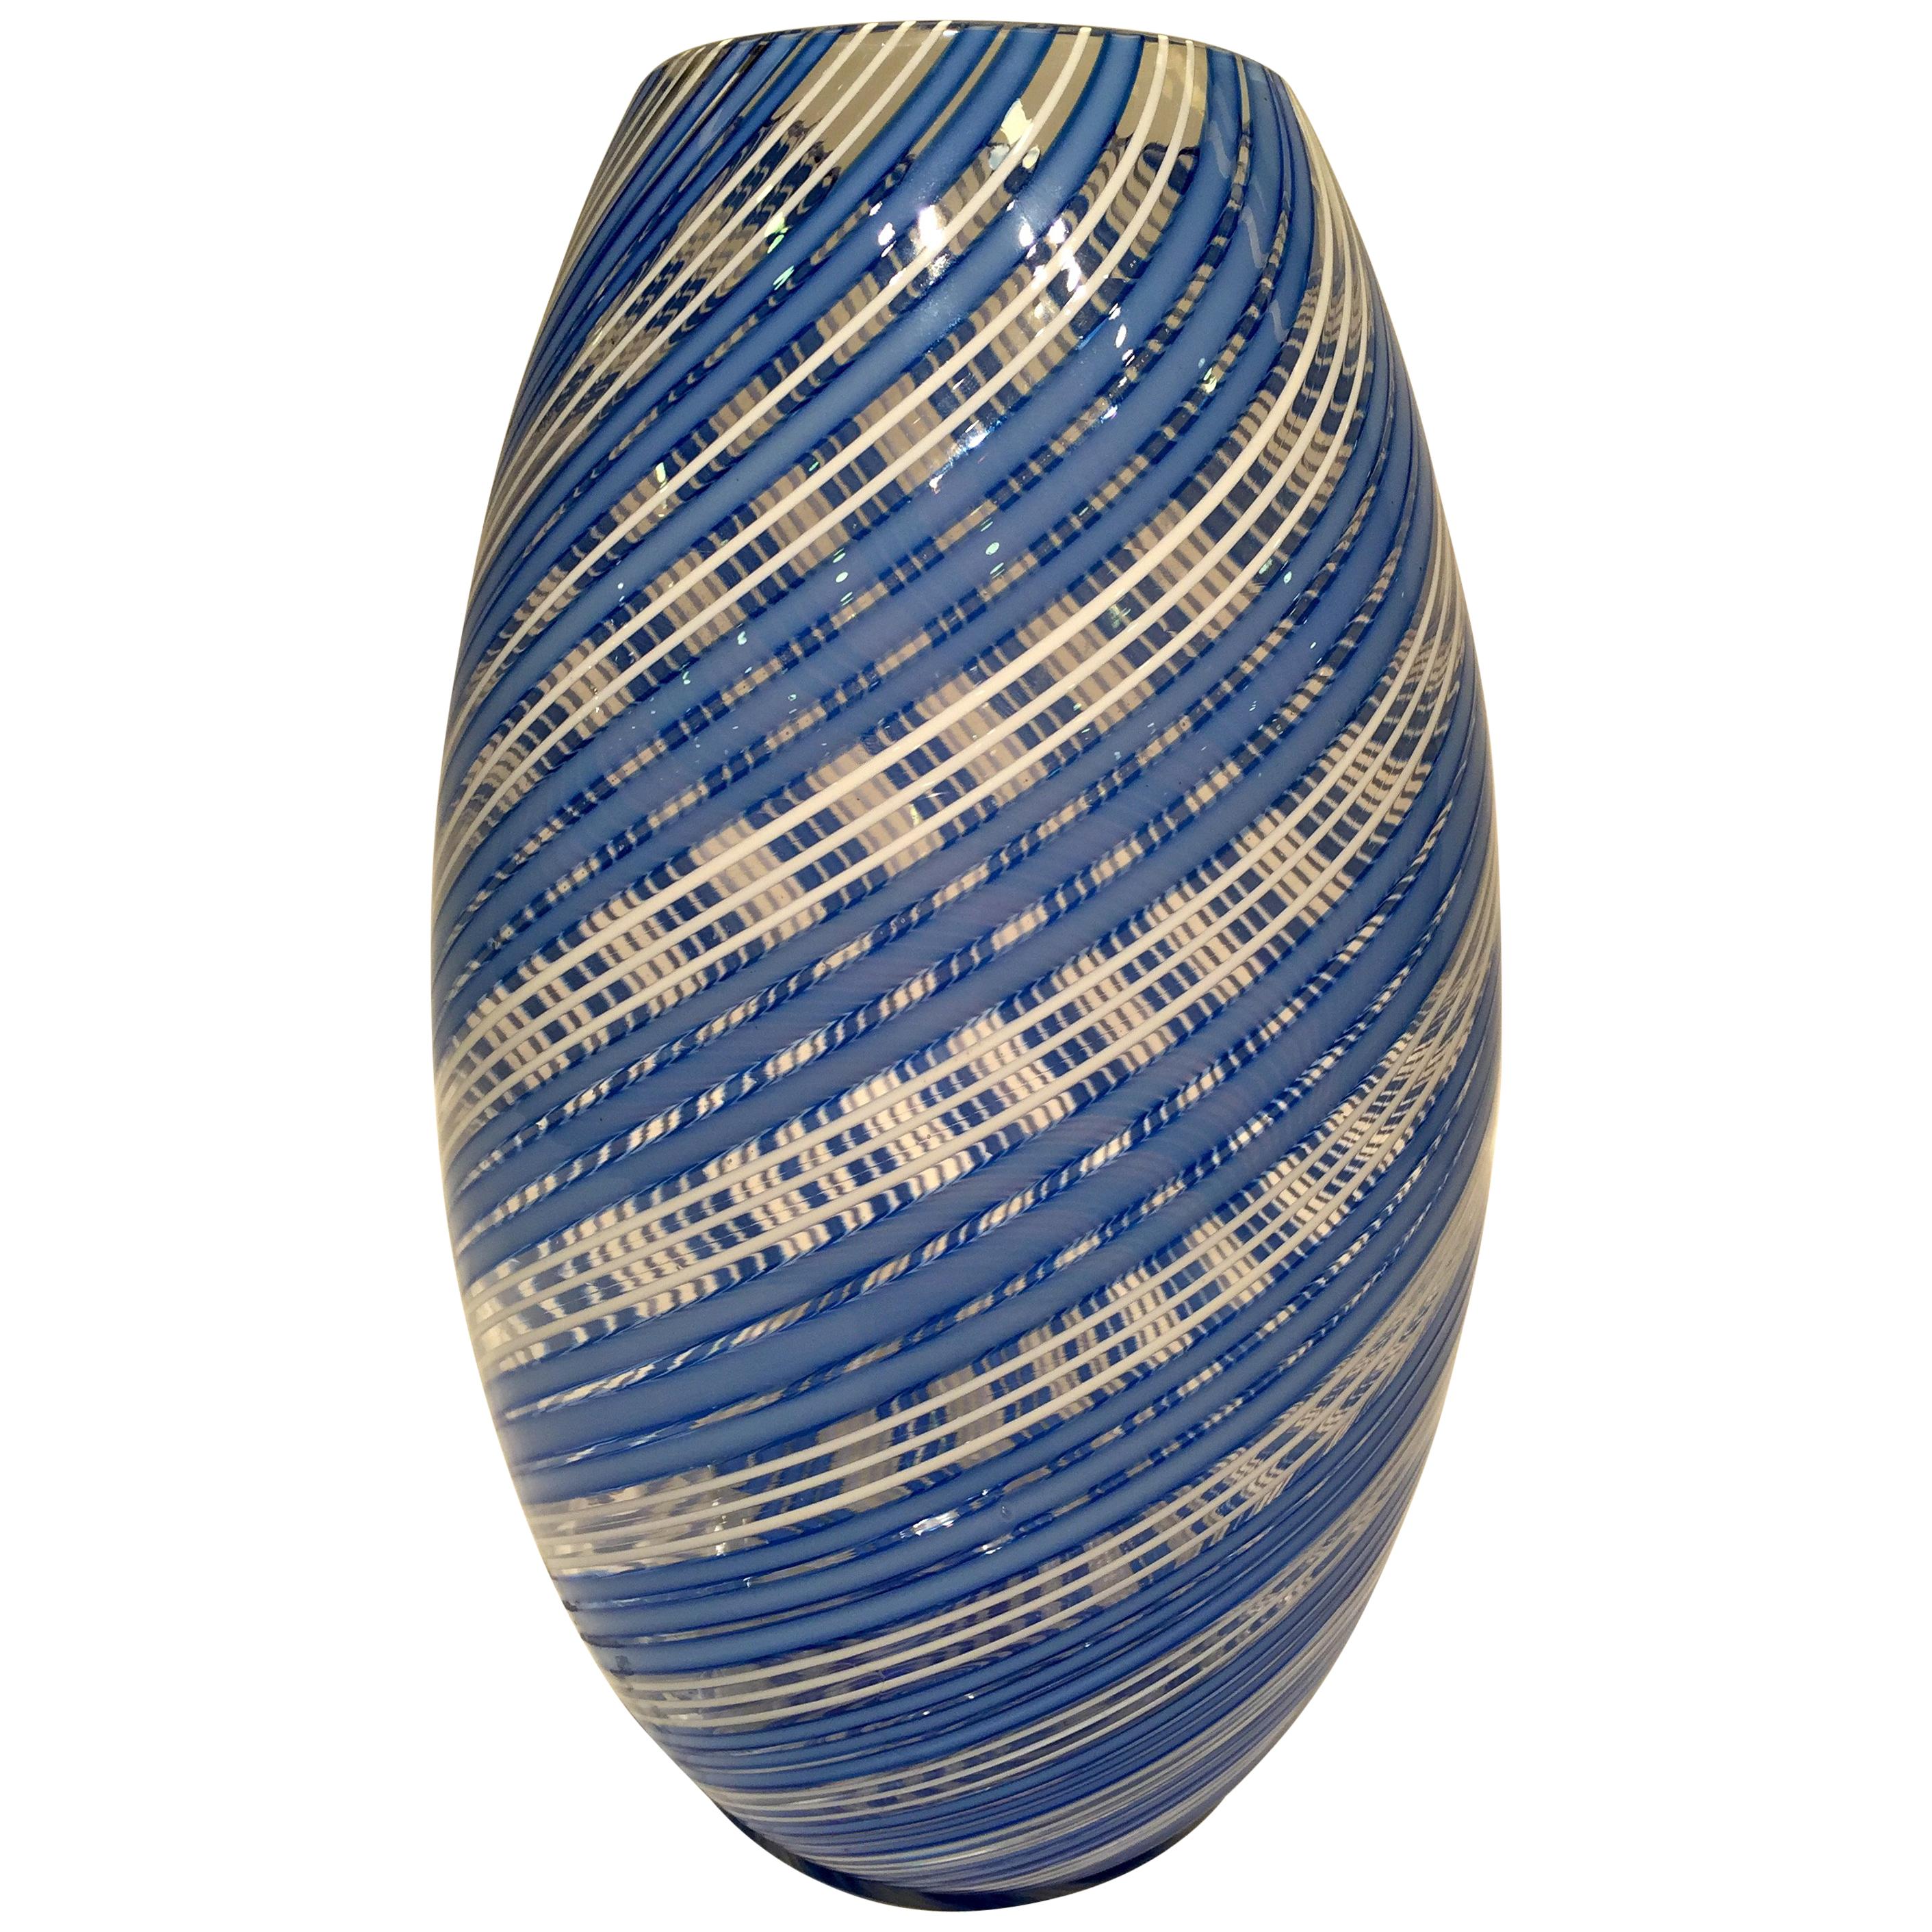 Dino Martens Murano Artistic Blown Glass Espiral Vase, circa 1950